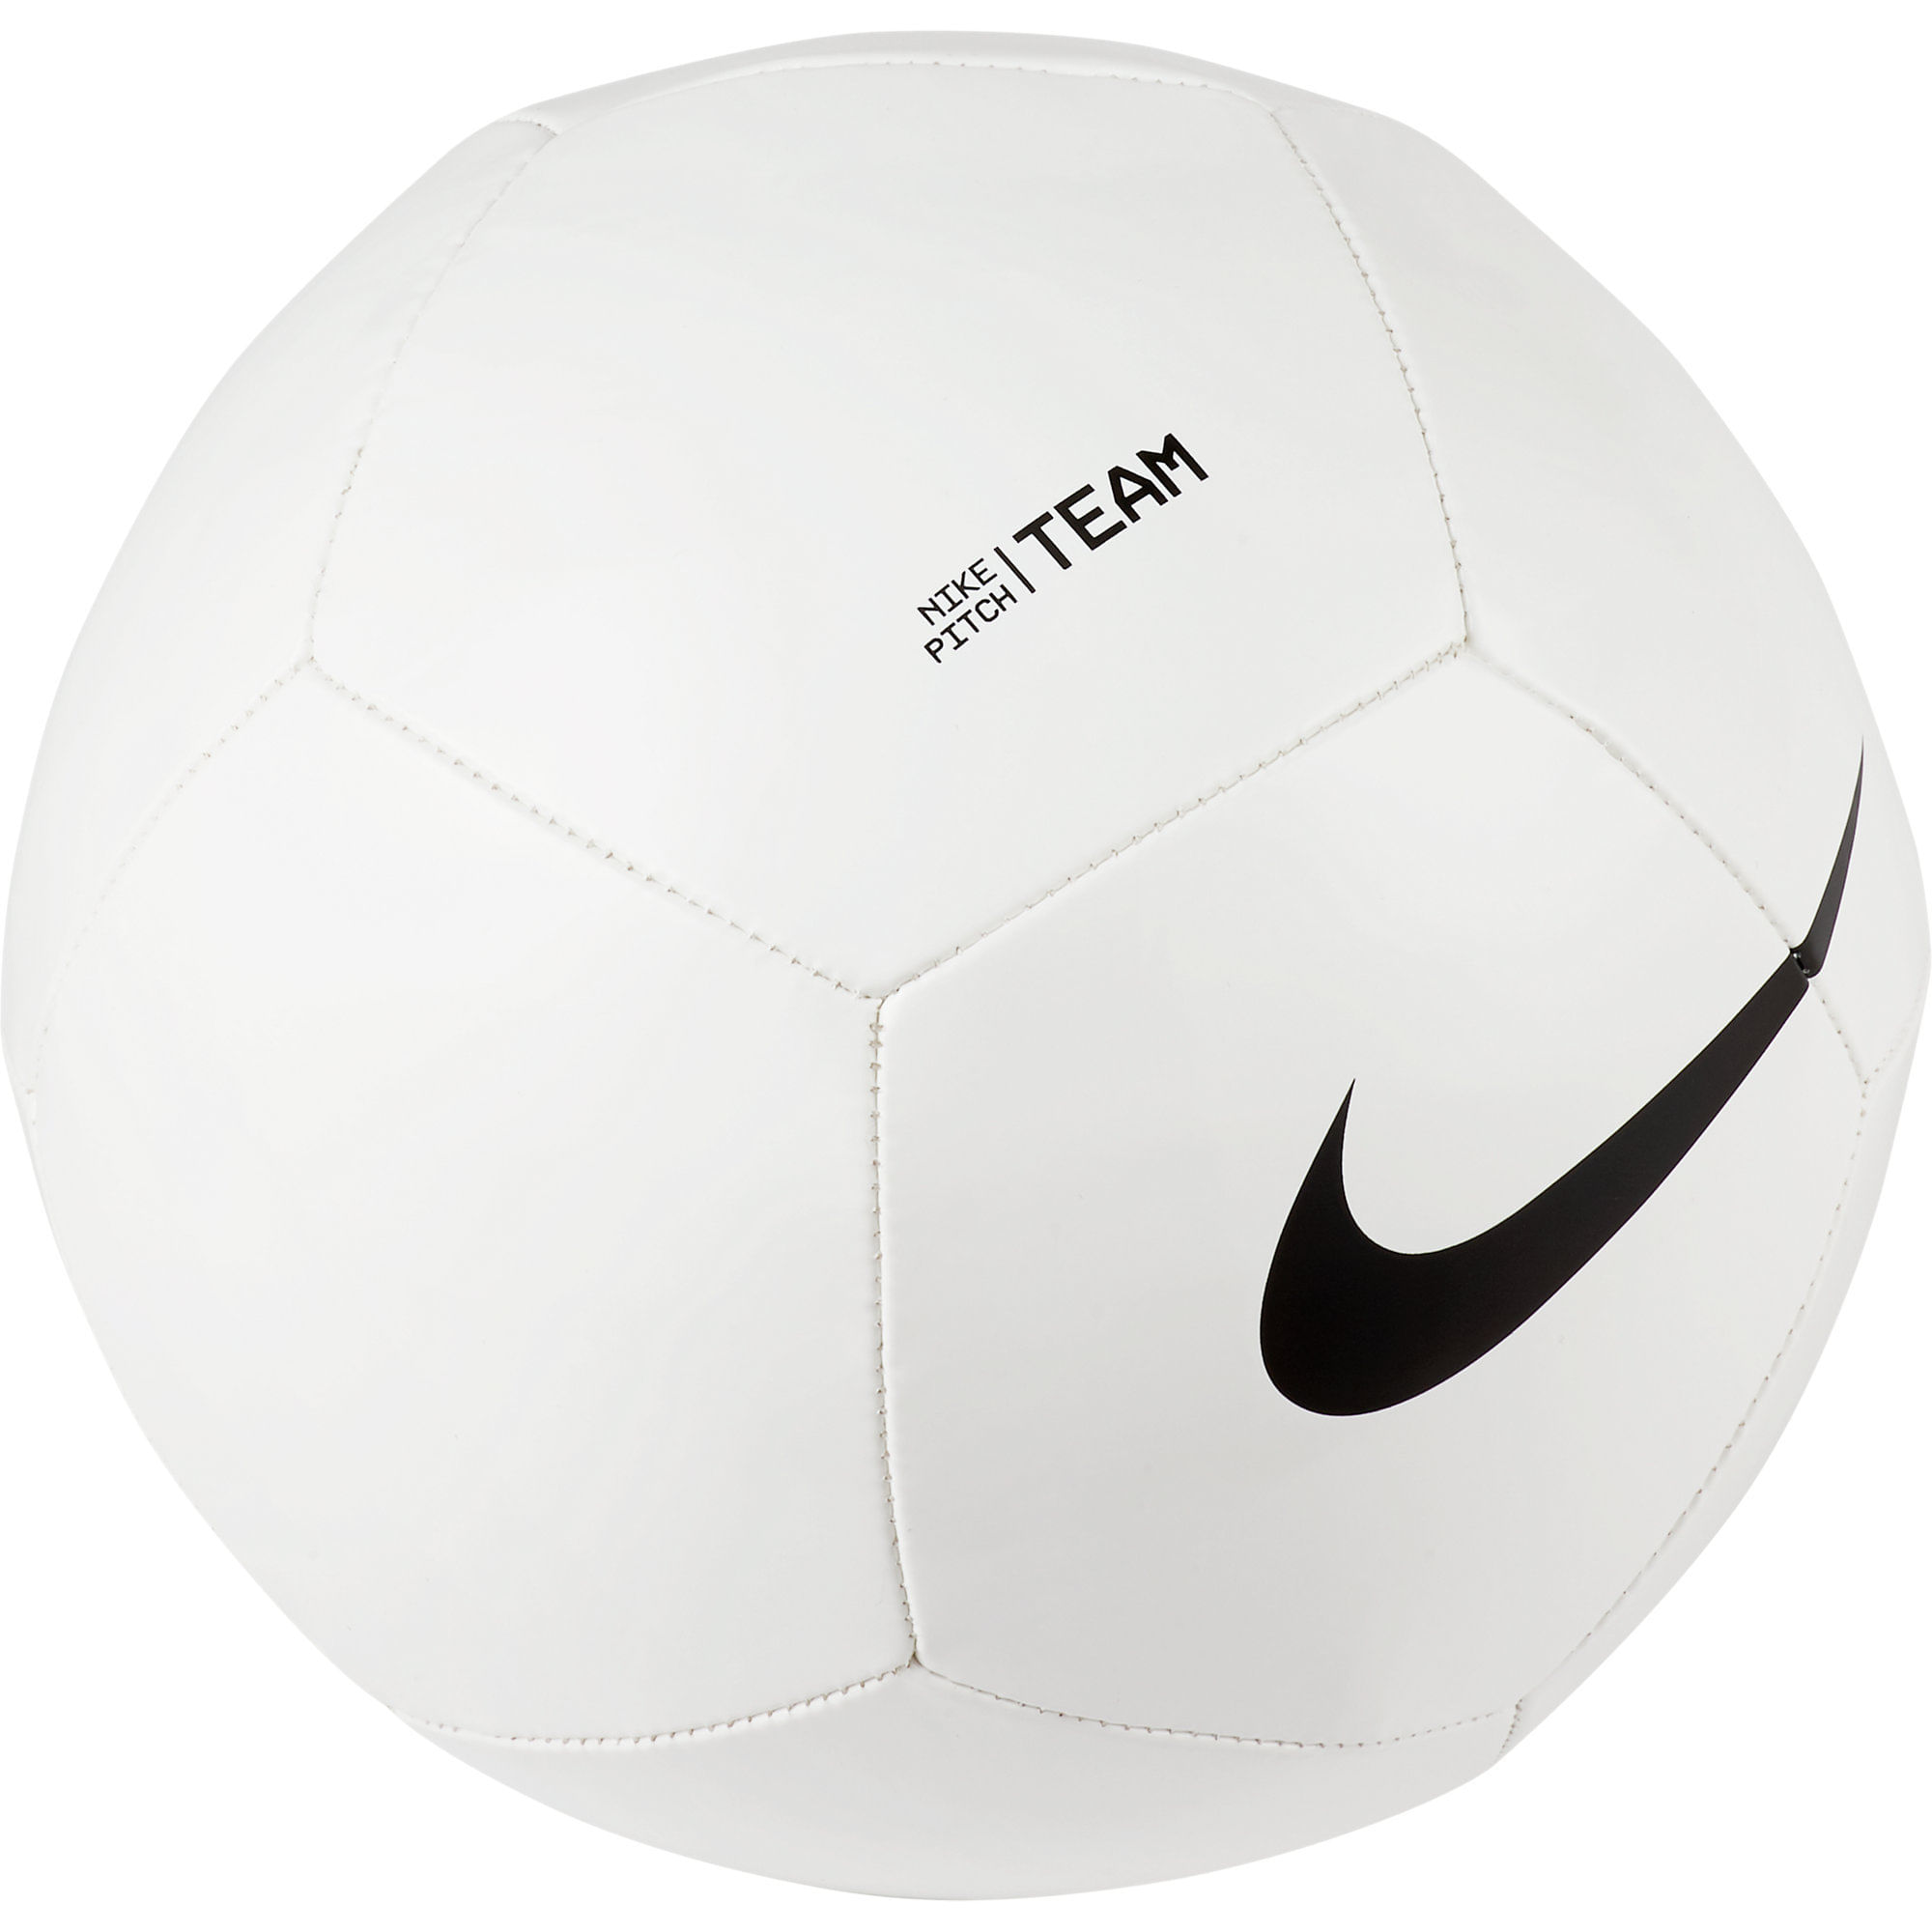 Nk Pitch Team - Sp21 Balón para futbol marca Referencia : DH9796-100 - prochampions